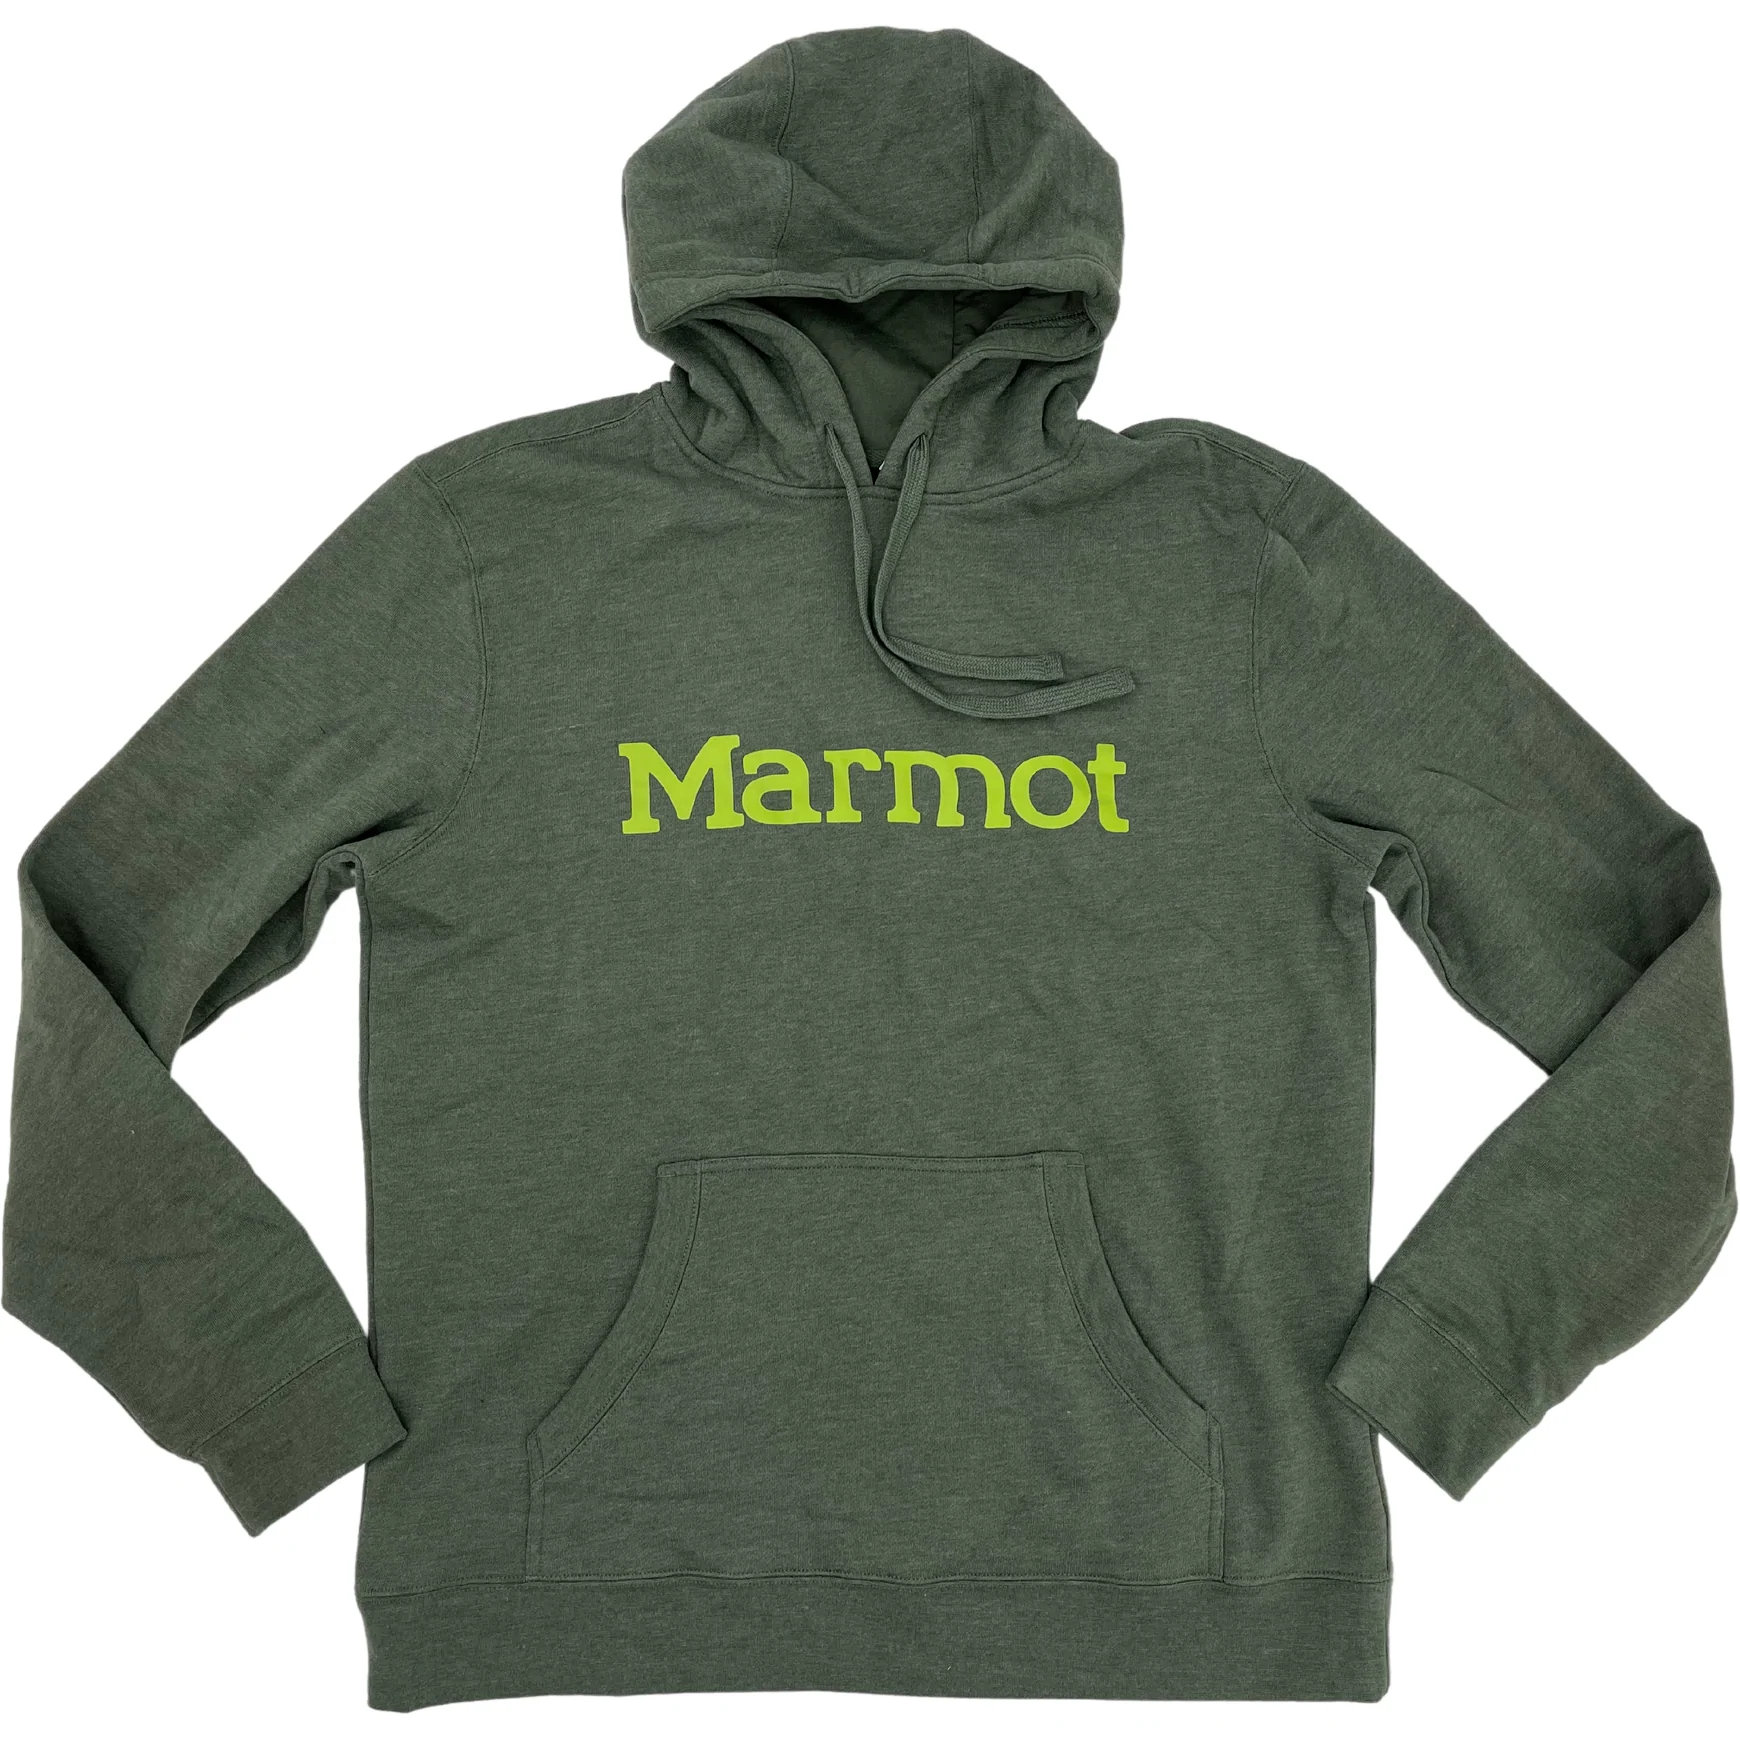 Marmot Men's Hoodie / Men's Pullover Sweater / Green / Various Sizes